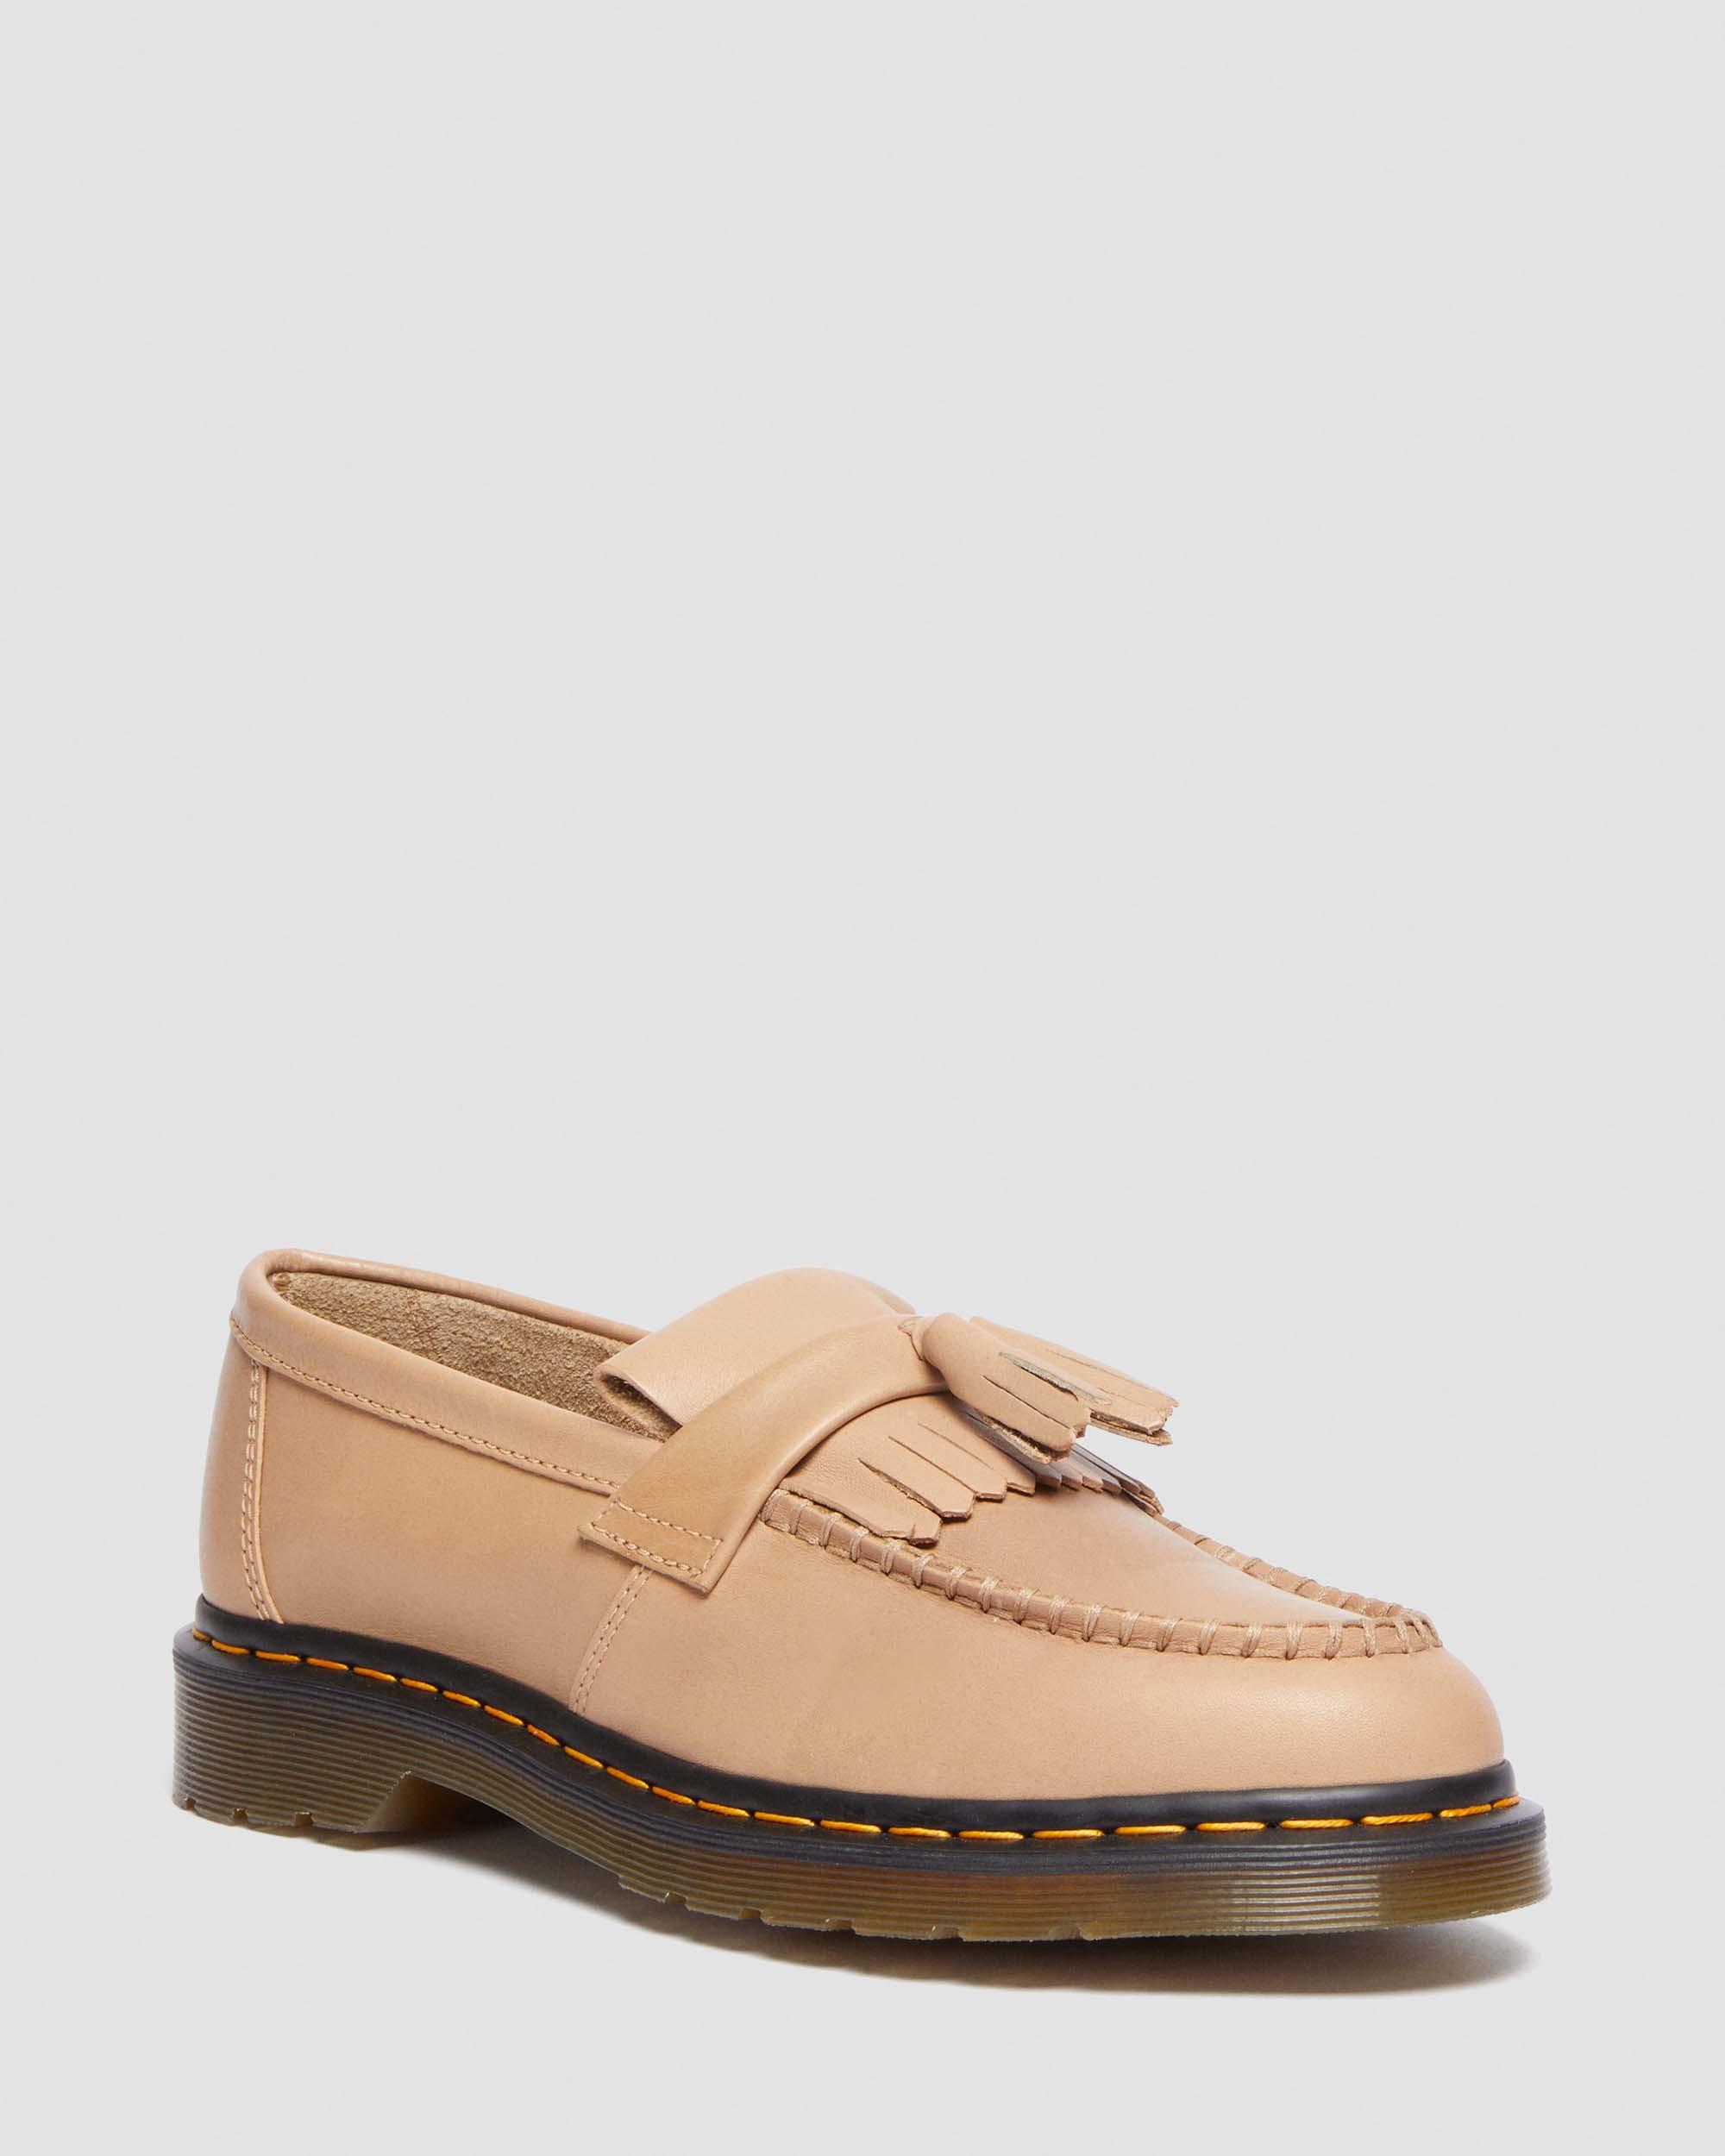 Adrian Carrara Leather Tassel Loafers, Beige | Dr. Martens